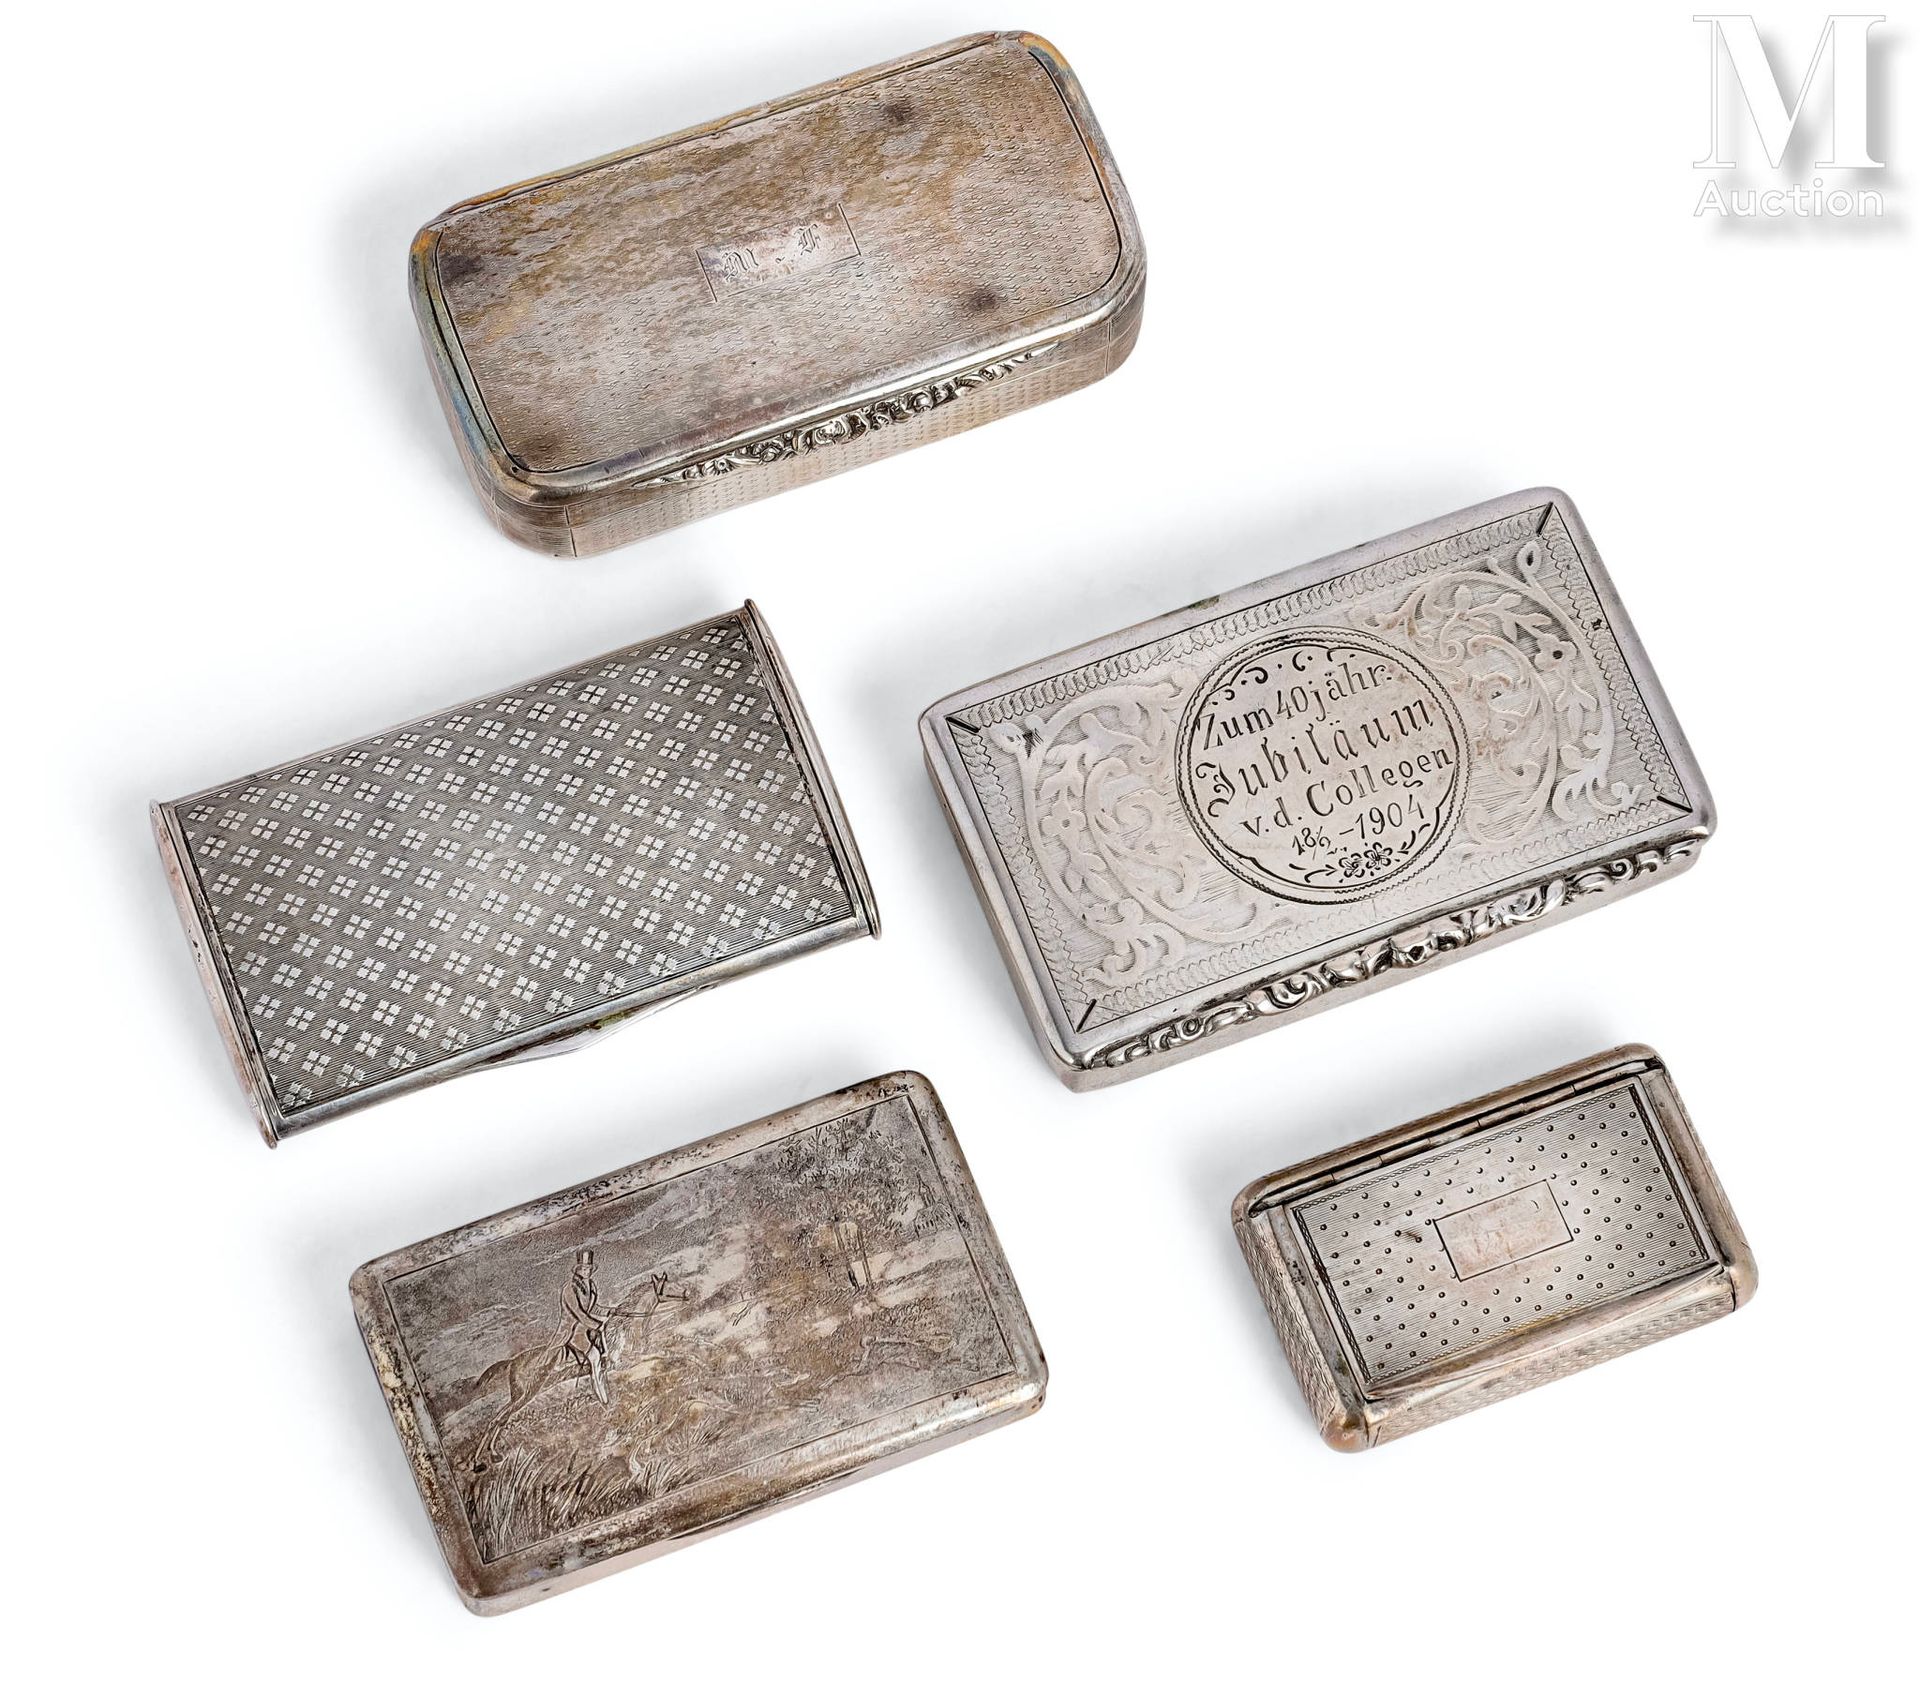 Tabatières 银质
包括 5 个银质鼻烟盒或鼻烟壶，经雕刻、錾刻或镌刻
- 一个饰有马术猎人追逐野兔的图案，内有奥匈帝国/奥地利匈牙利金匠的镀金印记 
&hellip;